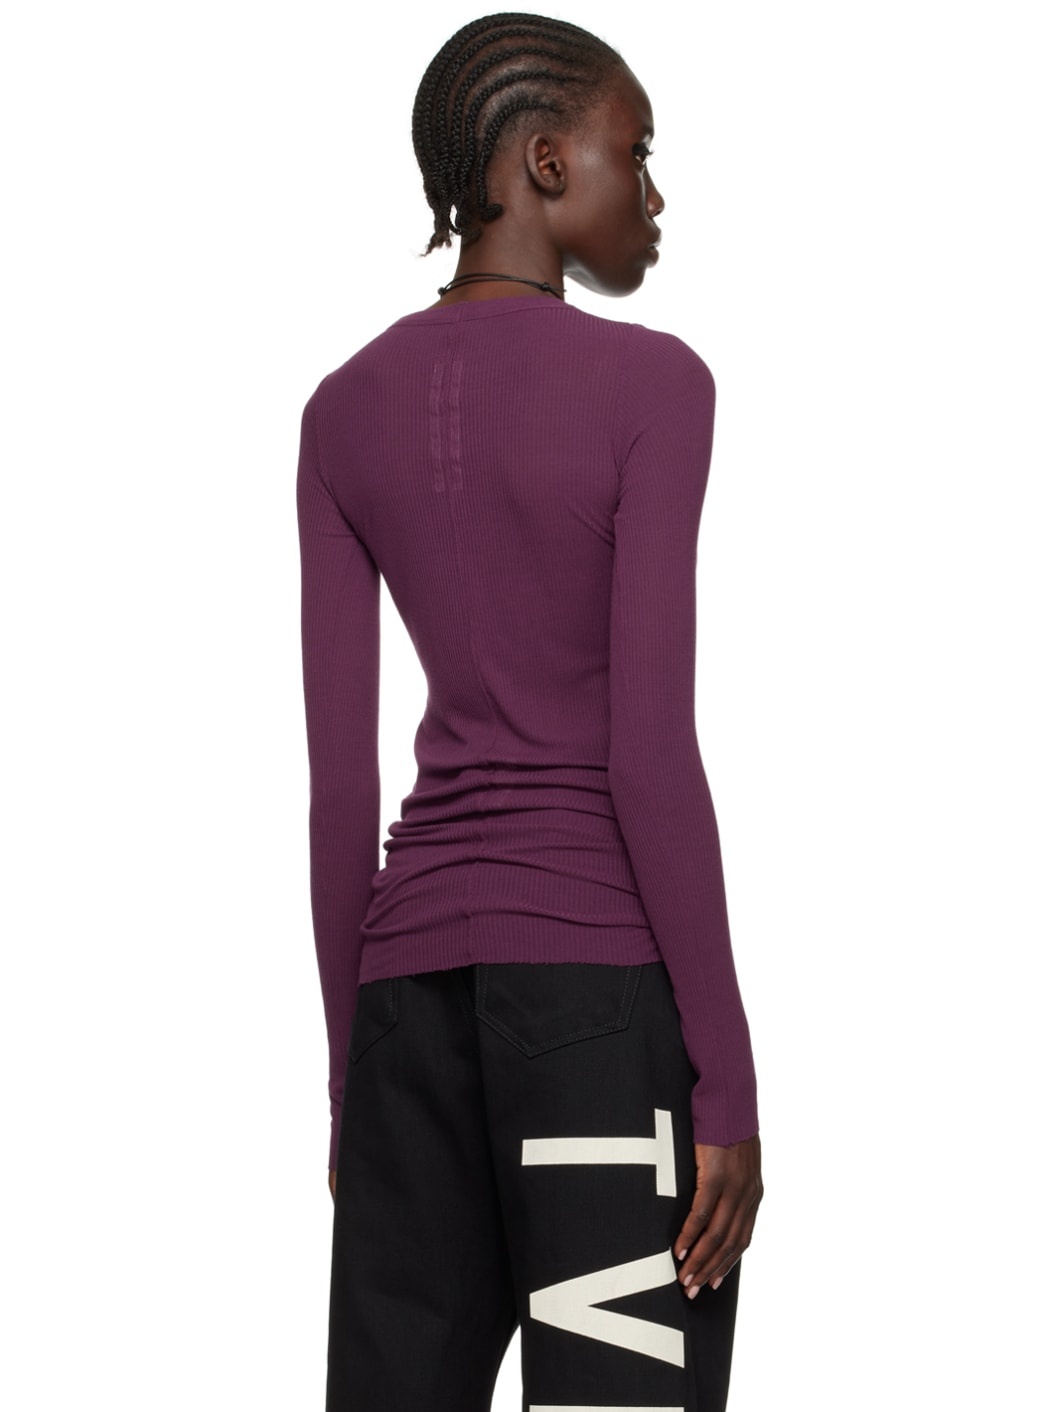 SSENSE Exclusive Purple KEMBRA PFAHLER Edition Long Sleeve T-Shirt - 3